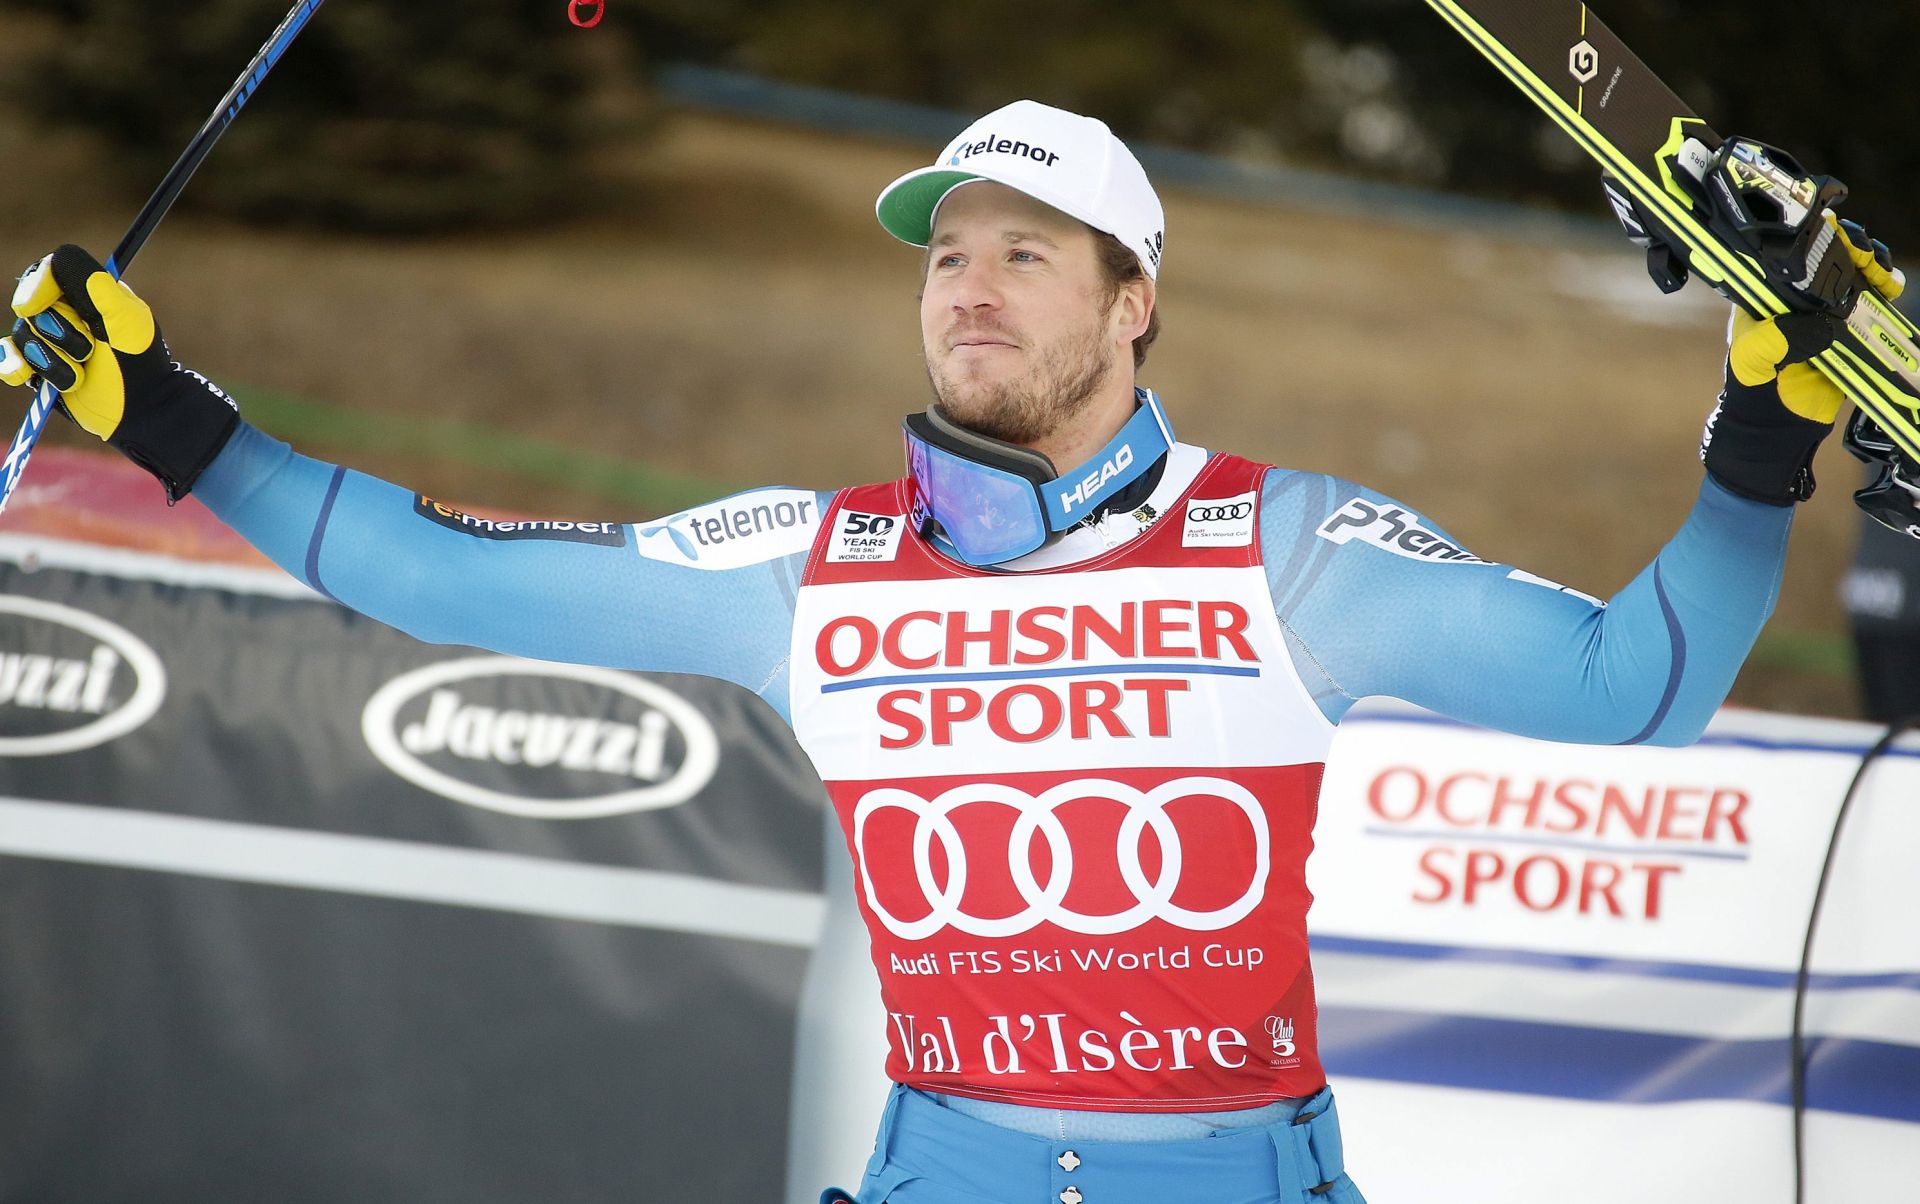 epa05657816 Winner Kjetil Jansrud of Norway celebrates after the men's Downhill race at the FIS Alpine Skiing World Cup in Val D'Isere, France, 03 December 2016.  EPA/GUILLAUME HORCAJUELO